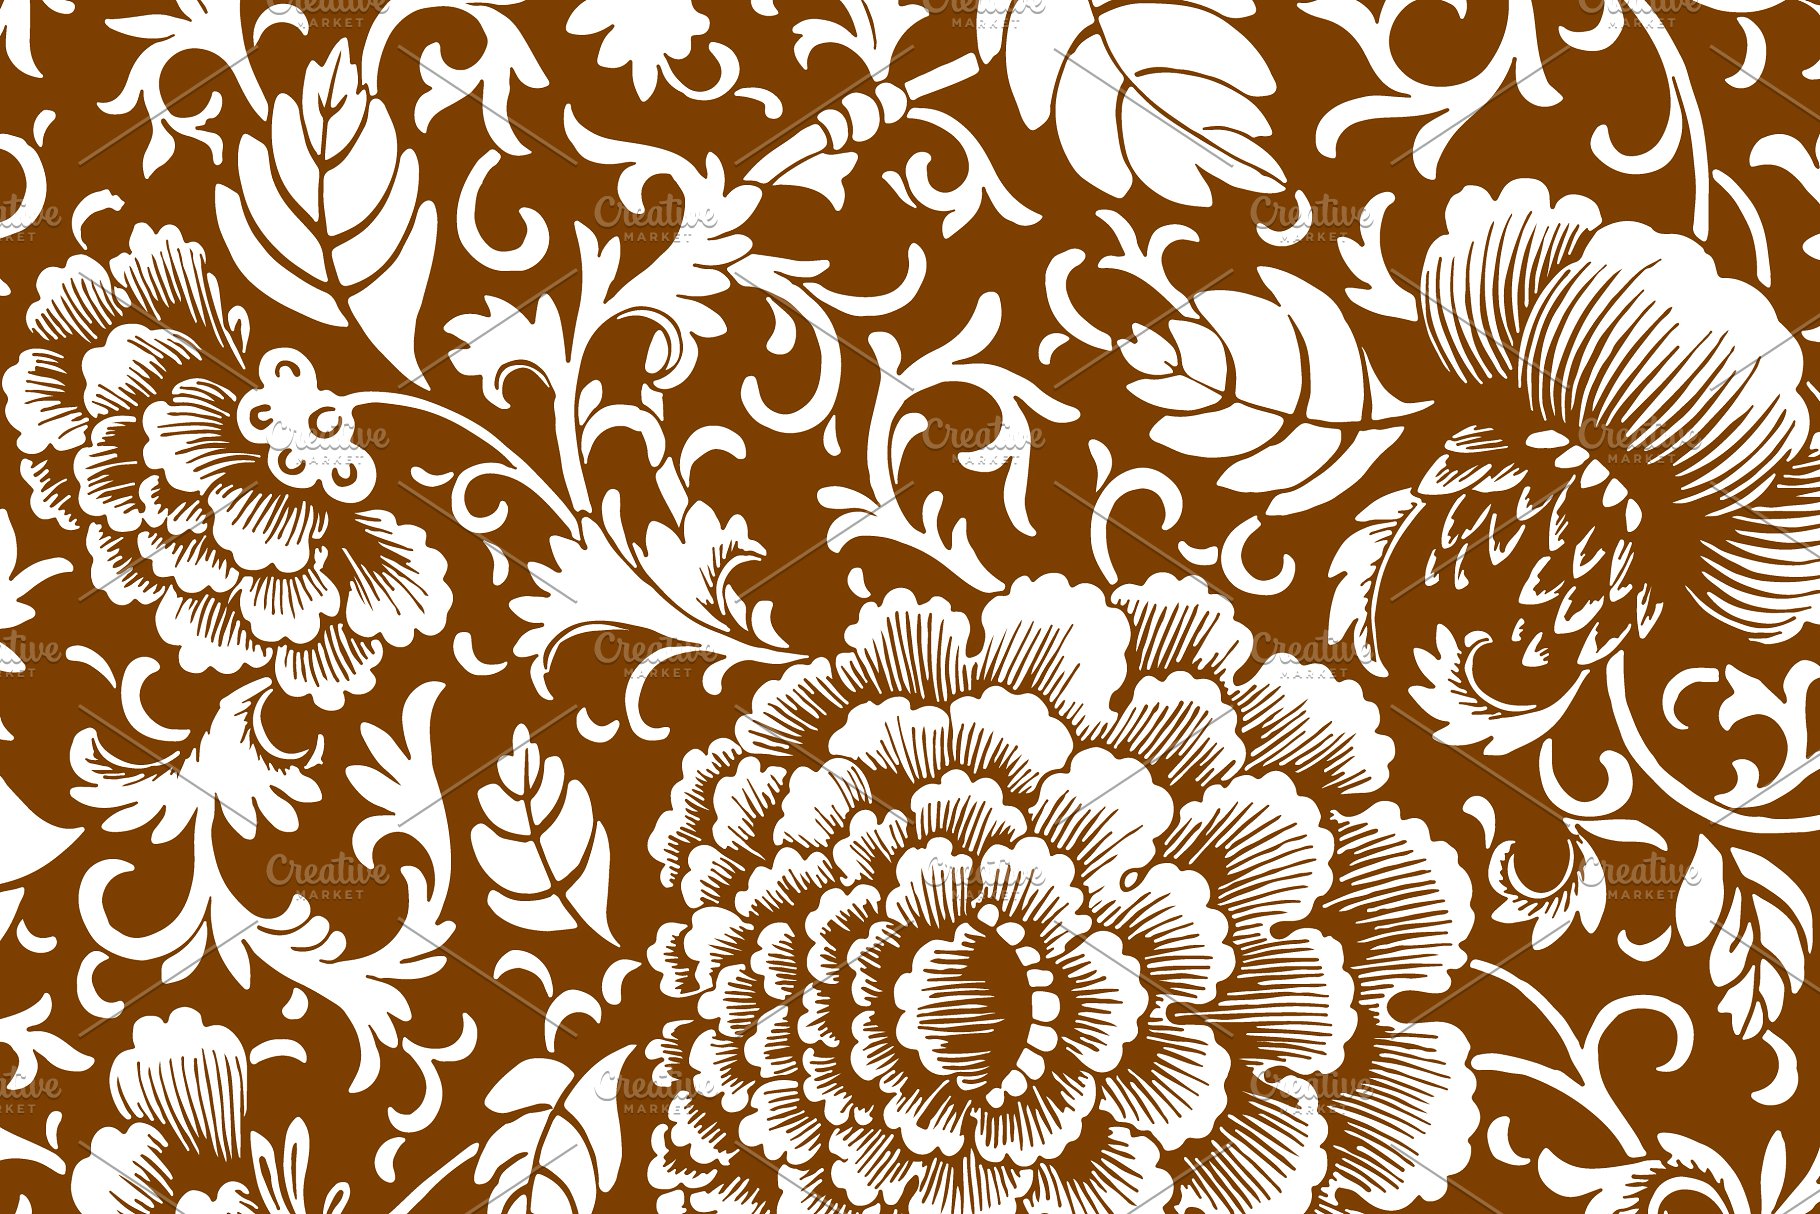 60种配色1440款花卉图案纹理 1,440 Floral Patterns in 60 Colors插图(18)